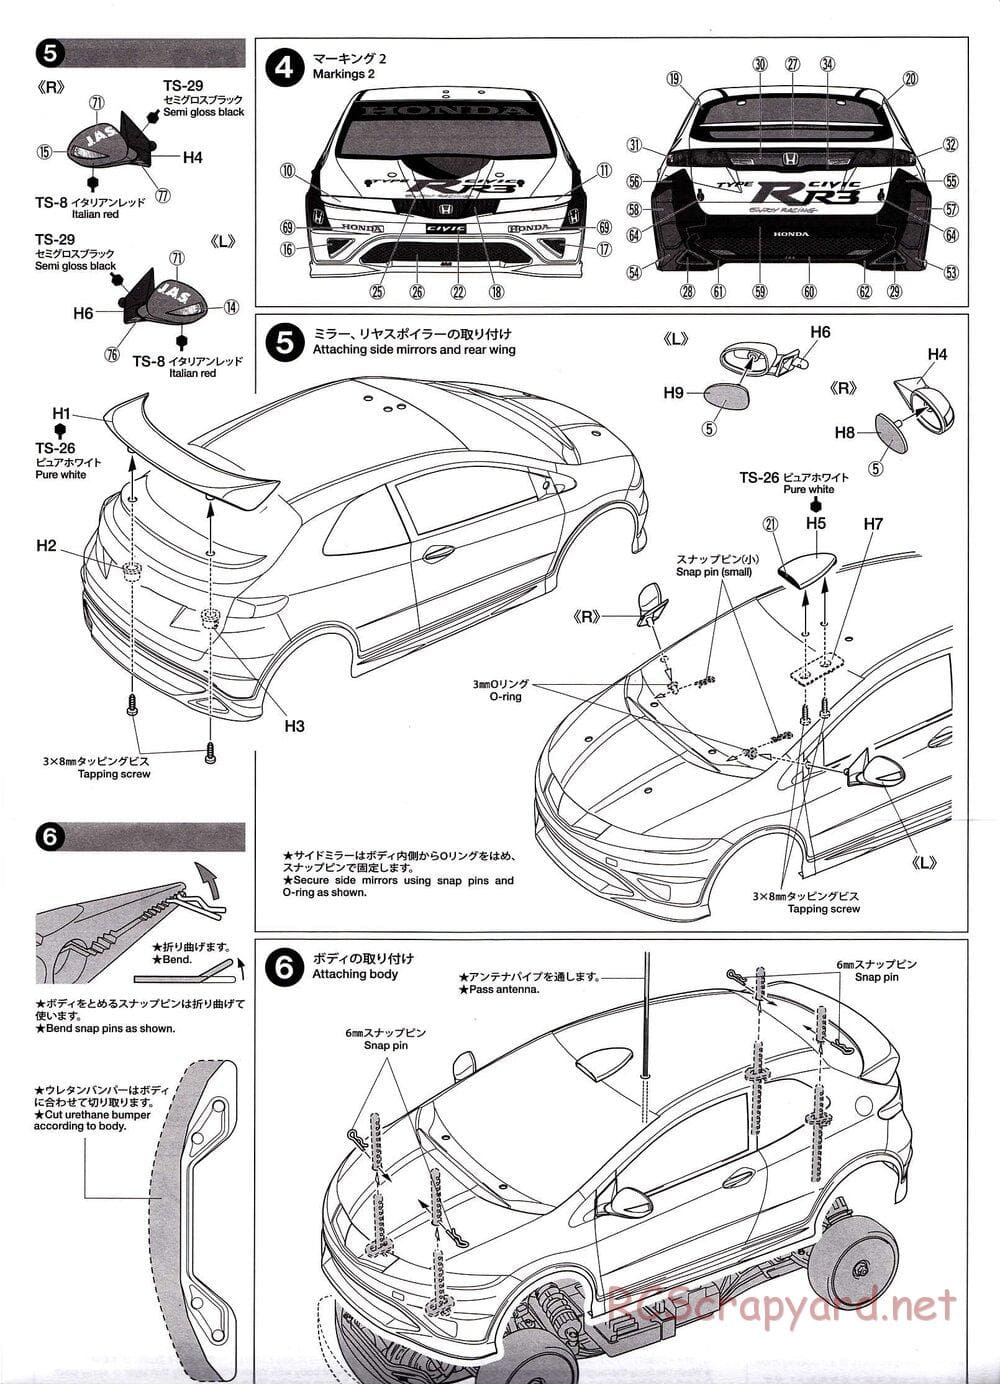 Tamiya - Honda Civic Type-R R3 JAS Motorsport - FF-03 Chassis - Body Manual - Page 3